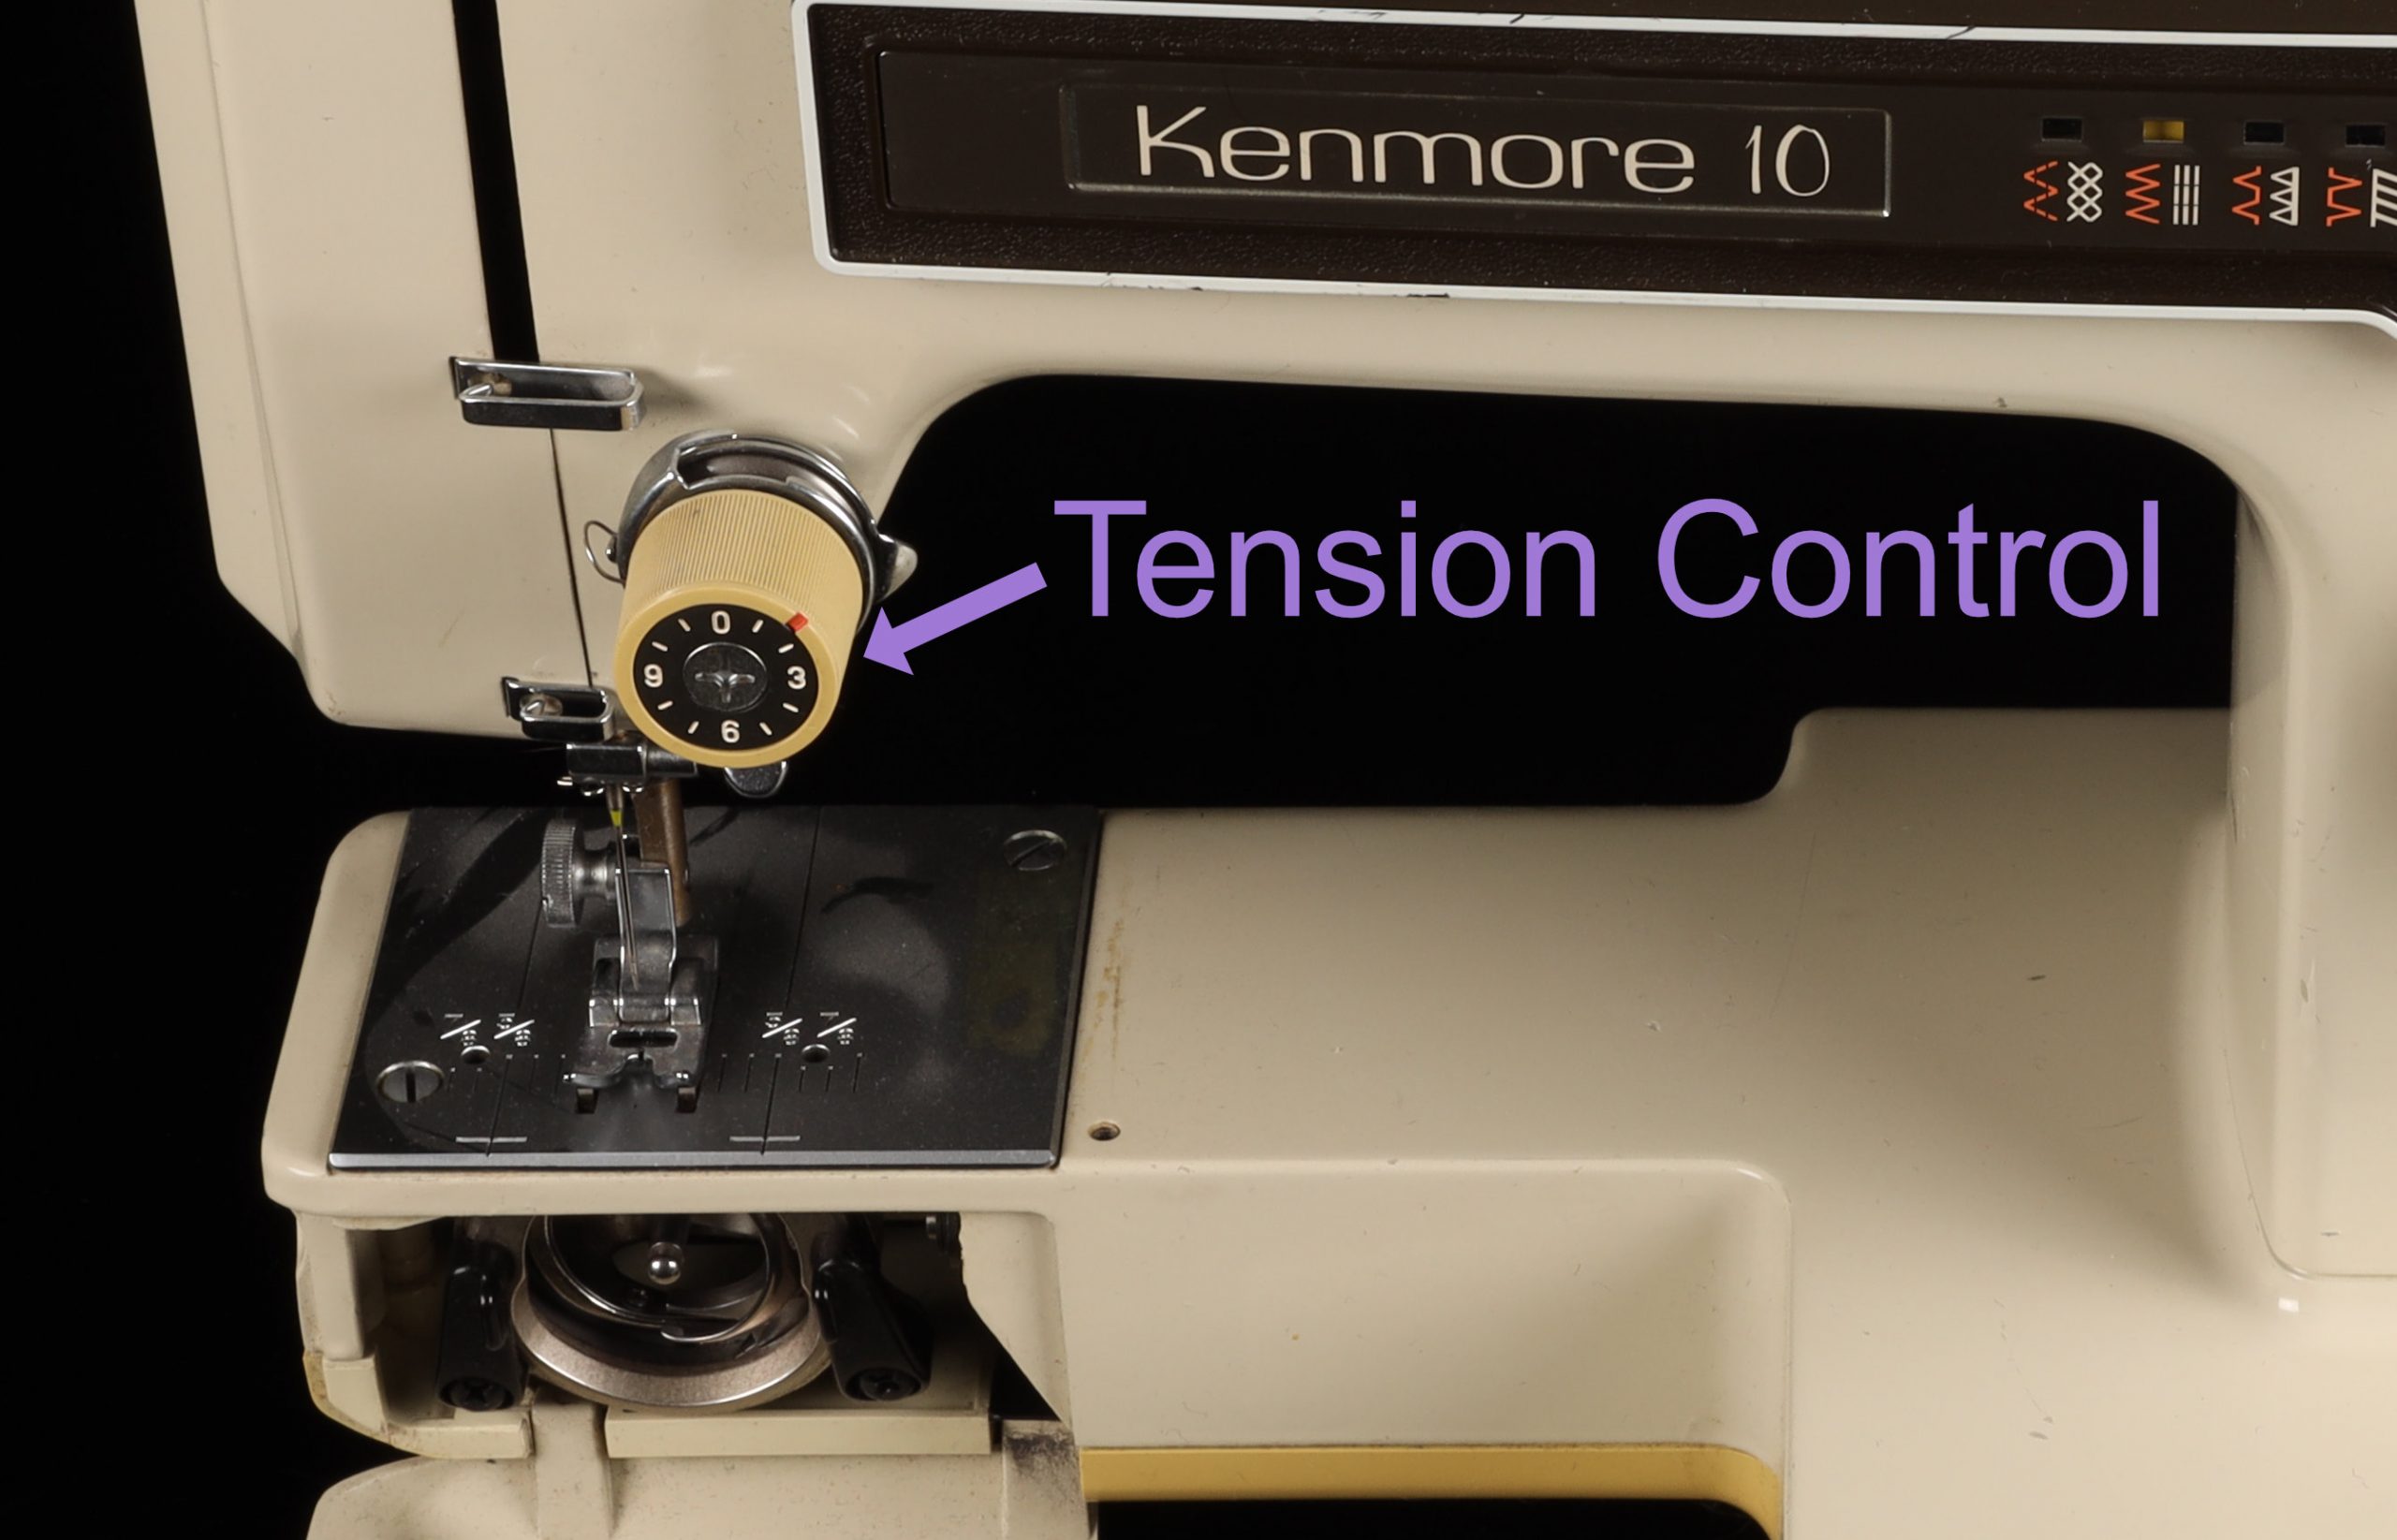 Kenmore Tension Control dial